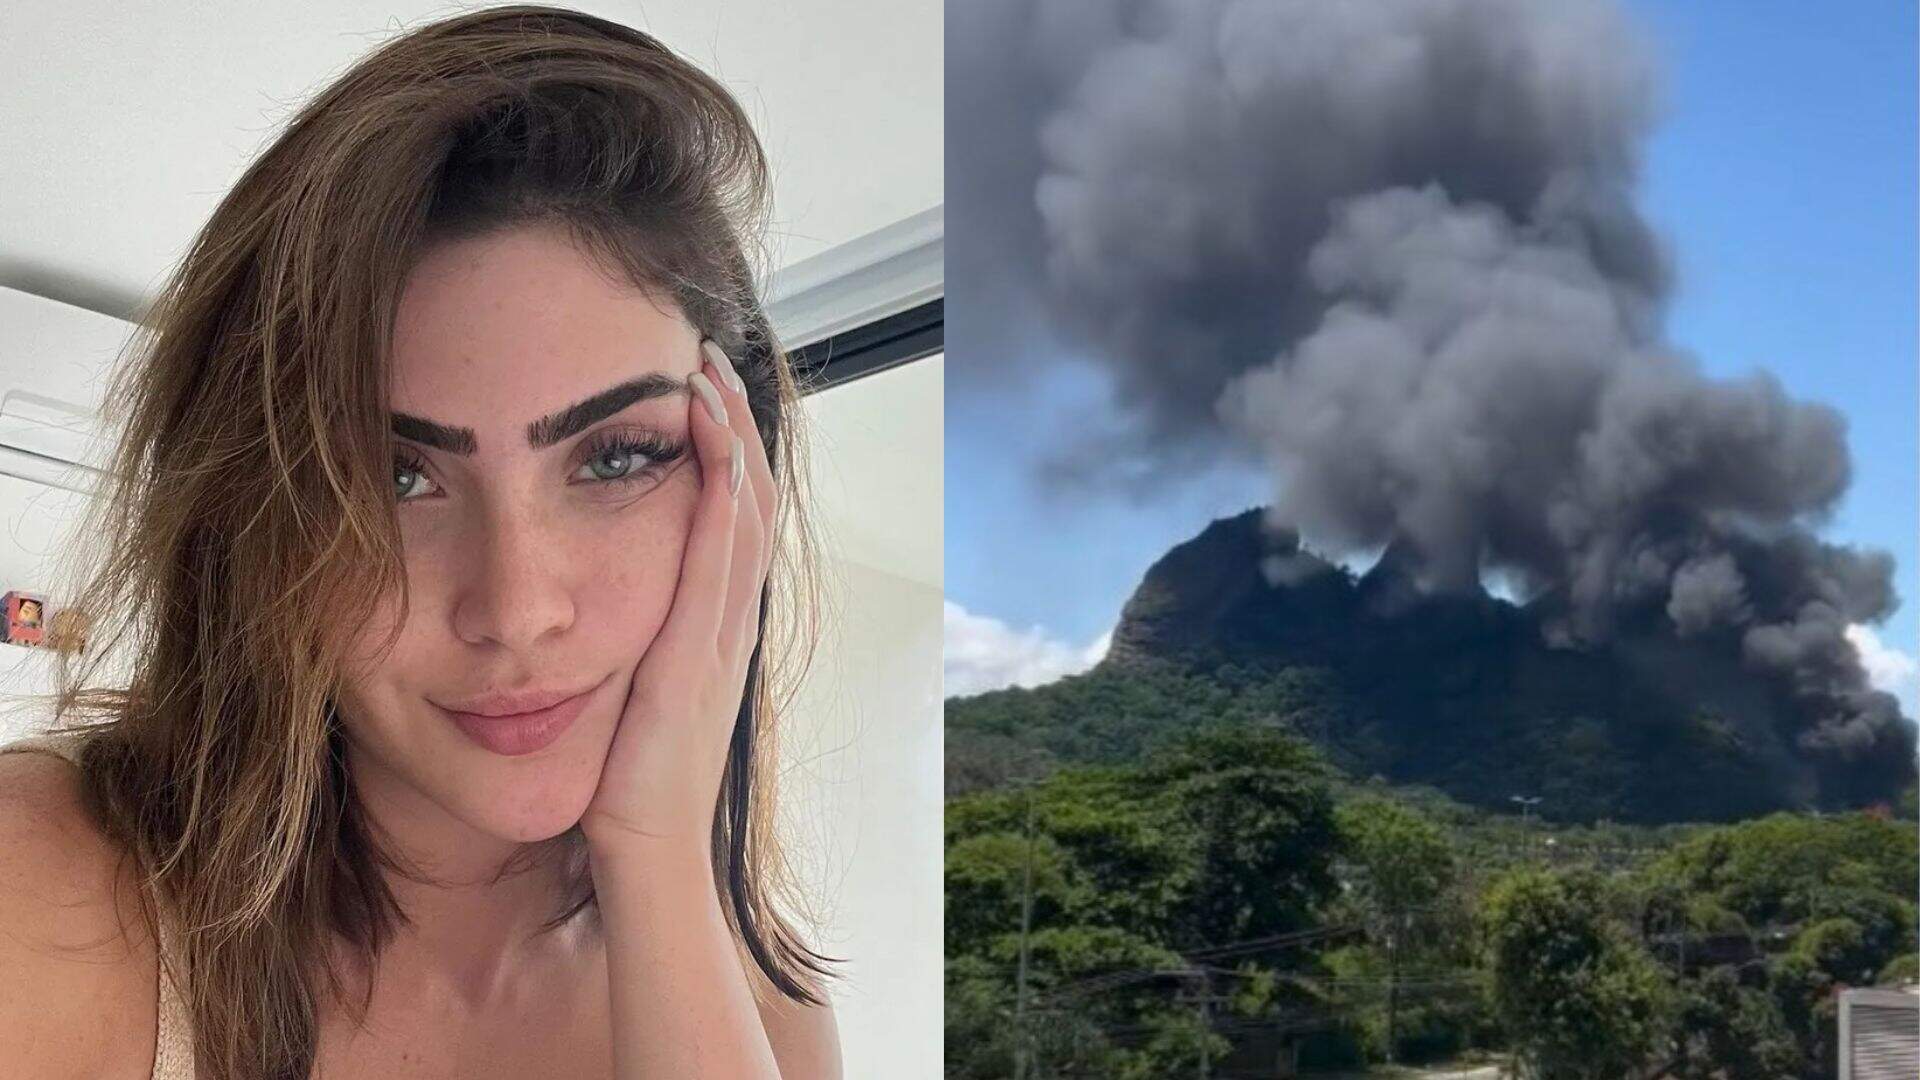 Susto! Após incêndio preocupante na Rede Globo, Jade Picon se pronuncia e manda recado aos fãs